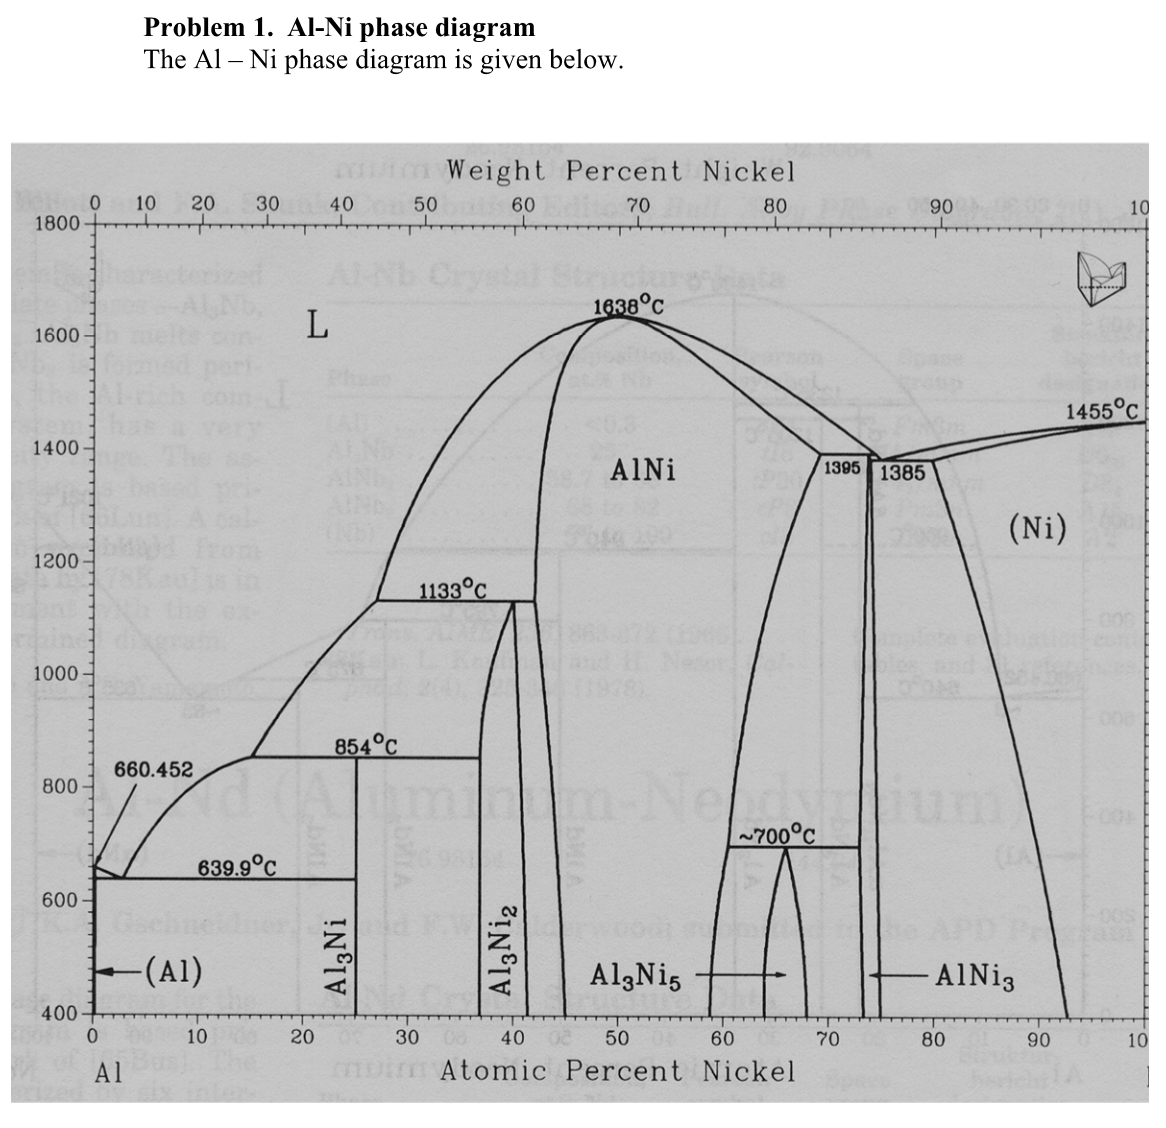 Problem 1. Al-Ni phase diagram
The Al – Ni phase diagram is given below.
mum Weight Percent Nickel
10
20
30
40 50
60
70
80
10
1800
06
1638°c
1600
1455°C
1400
AINI
1395 1385
INDE
(Ni)
1200
1133°C
1000
854°C
660.452
800
~700°C
639.9°C
600-
(Al)
AlgNis
AIN13
400
10
20
30 0
40
50
60
70
80
90
10
A1
muim Atomic Percent Nickel
inte
AlgNi
Al3Niz
